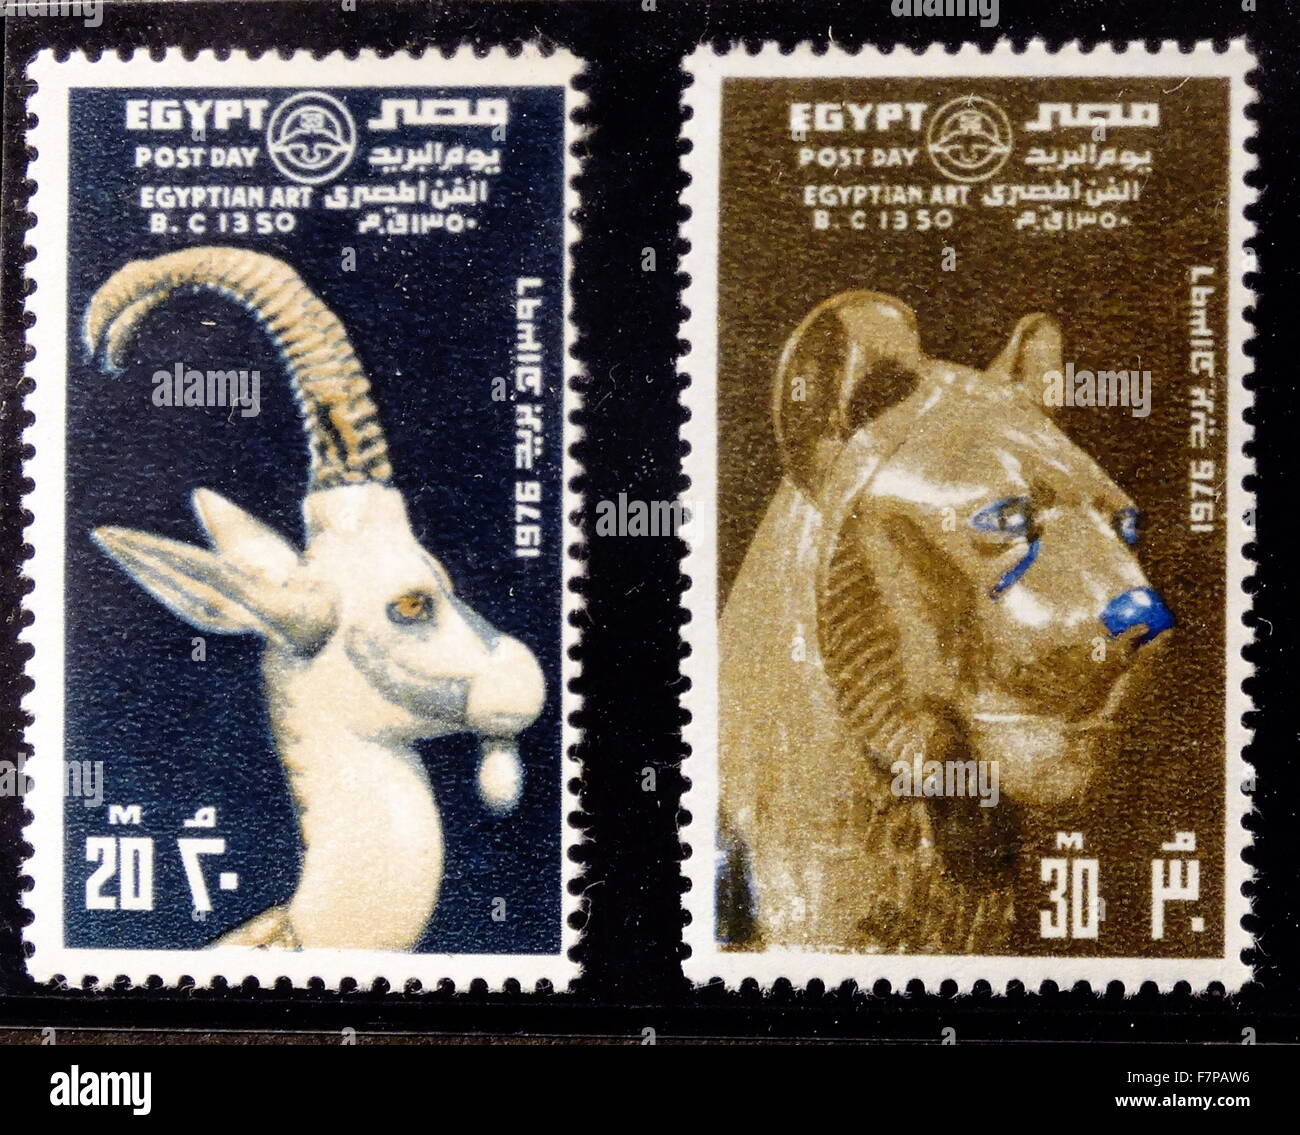 1967 sellos egipcios con artefactos de antiguas tumbas egipcias Foto de stock